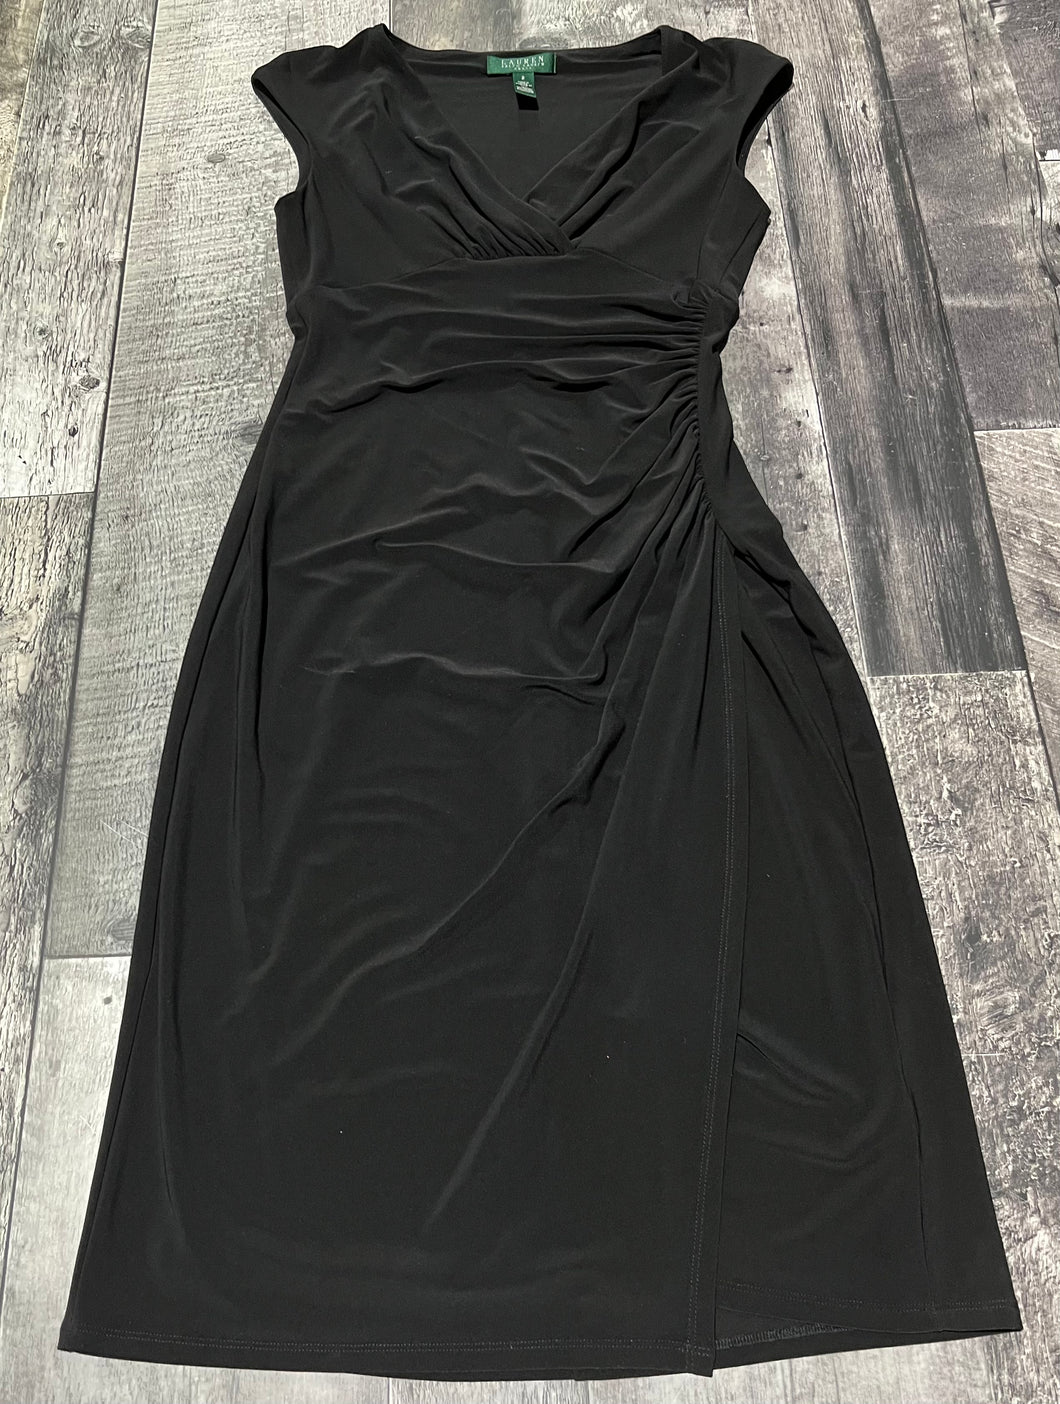 Ralph Lauren black dress - Hers size 2